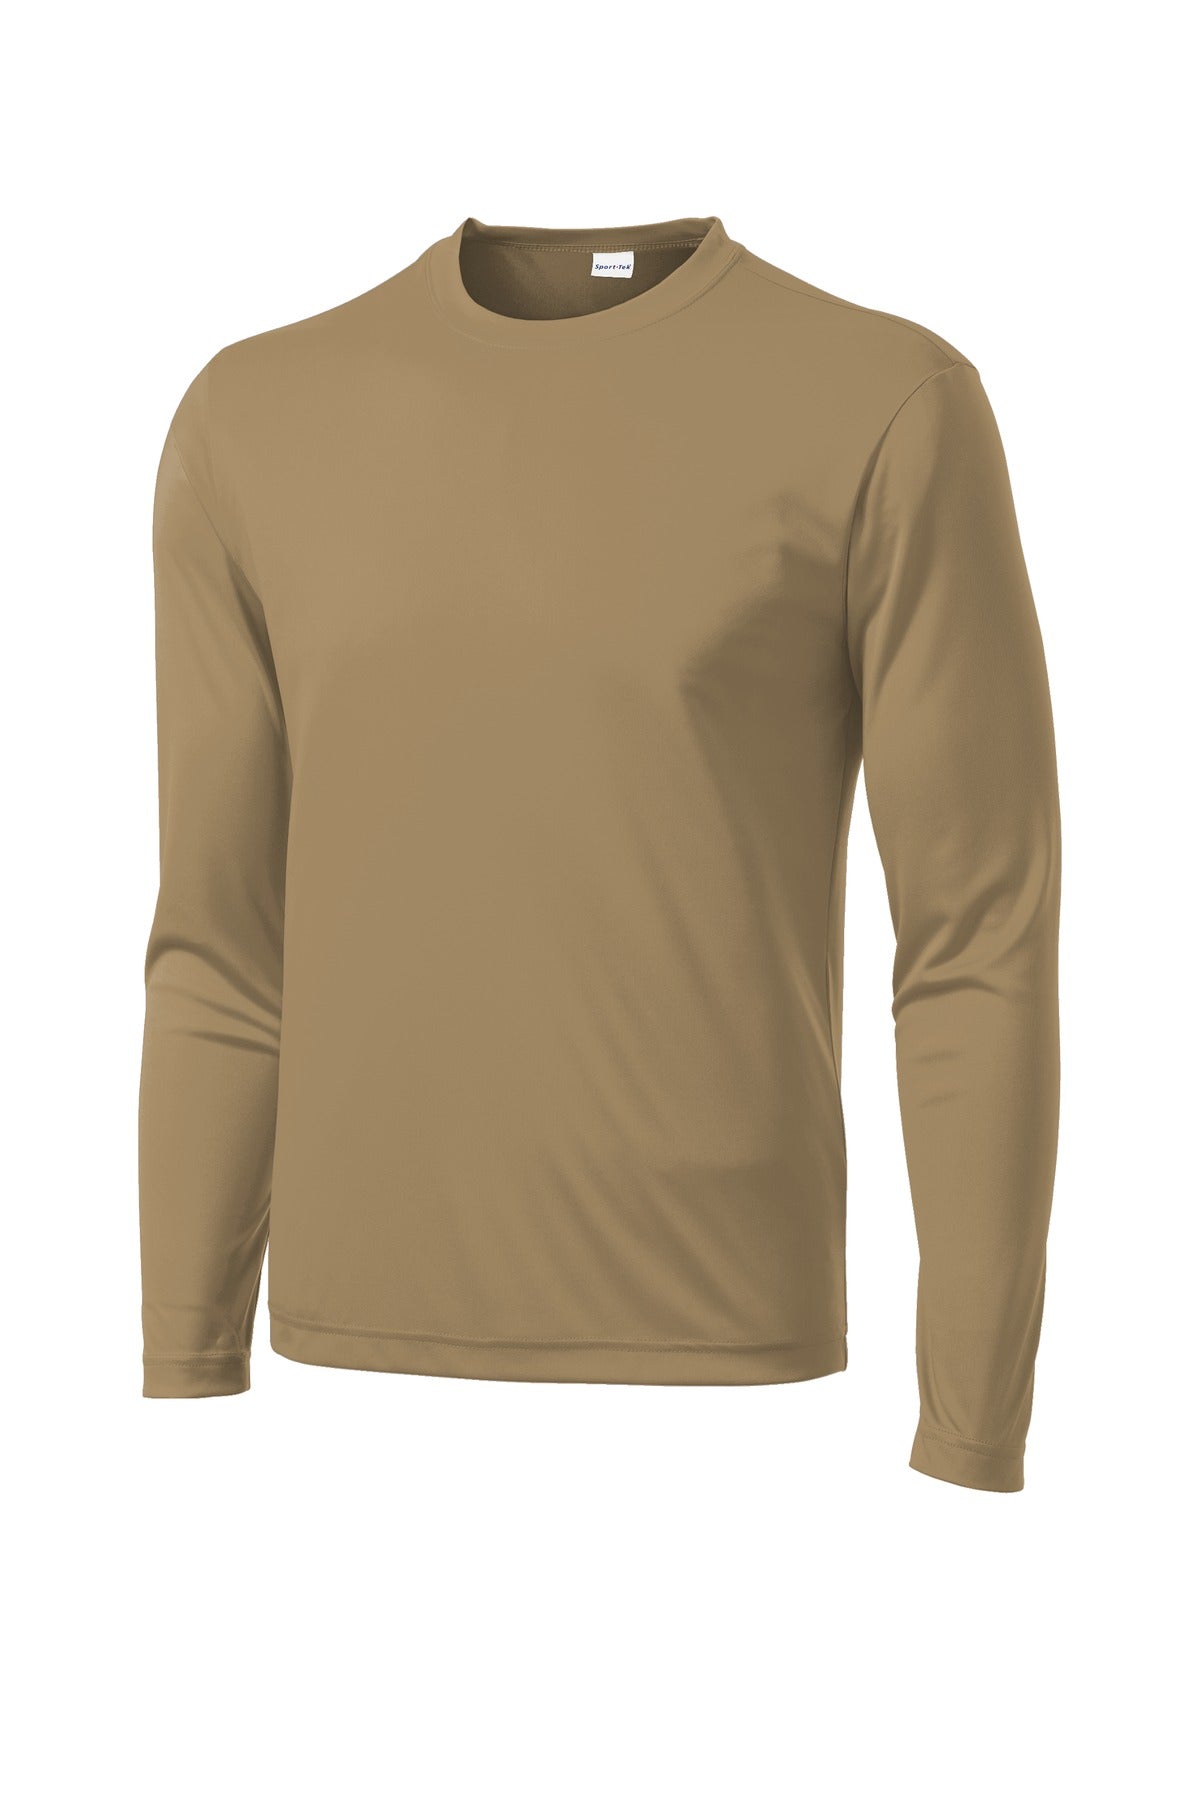 Sport-Tek Long Sleeve PosiCharge Competitor Tee. ST350LS - BT Imprintables Shirts